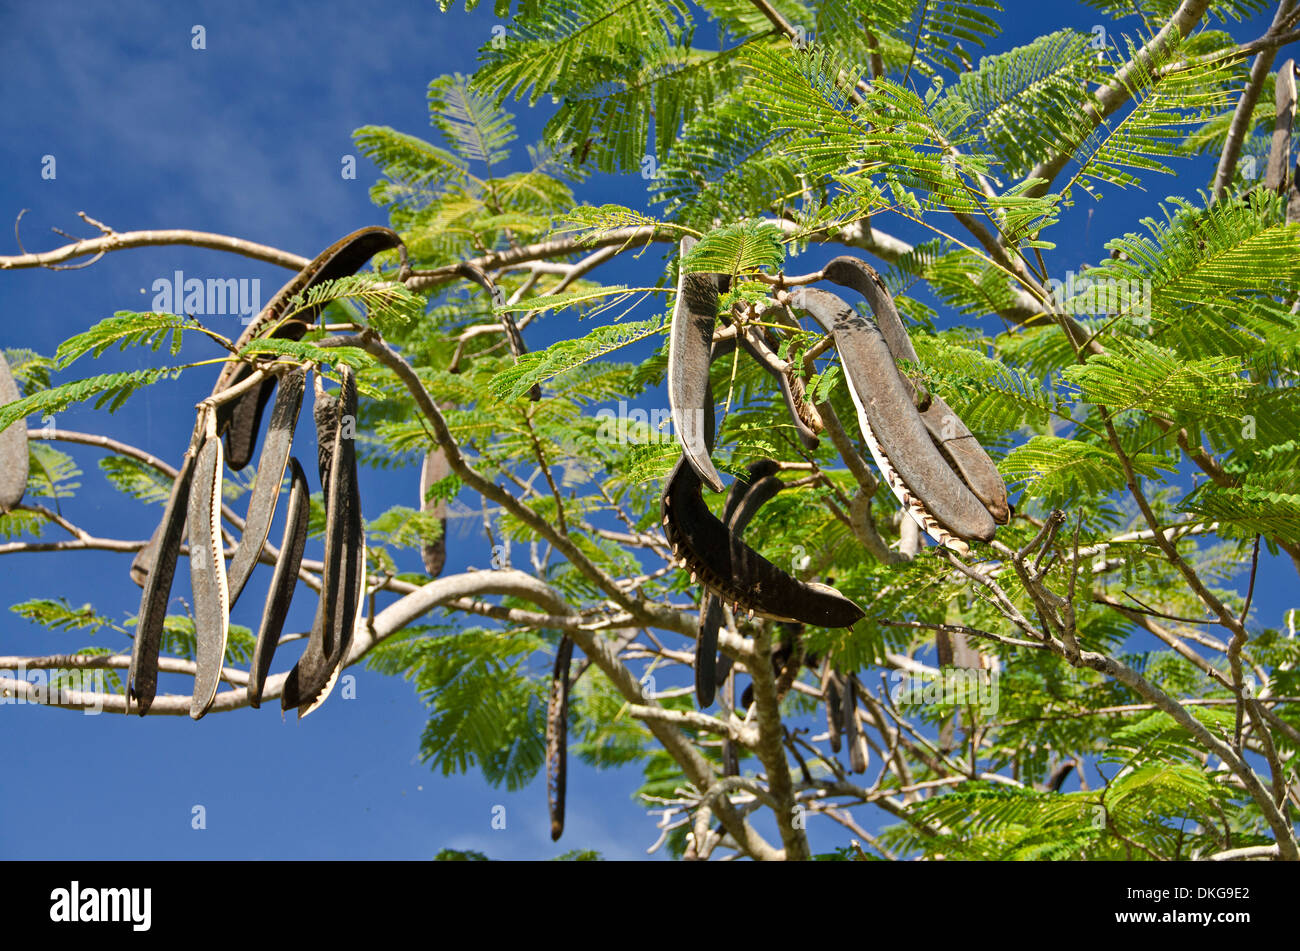 Flame tree, Delonix regia, Nevis, Saints Kitts and Nevis, the Caribbean, America Stock Photo